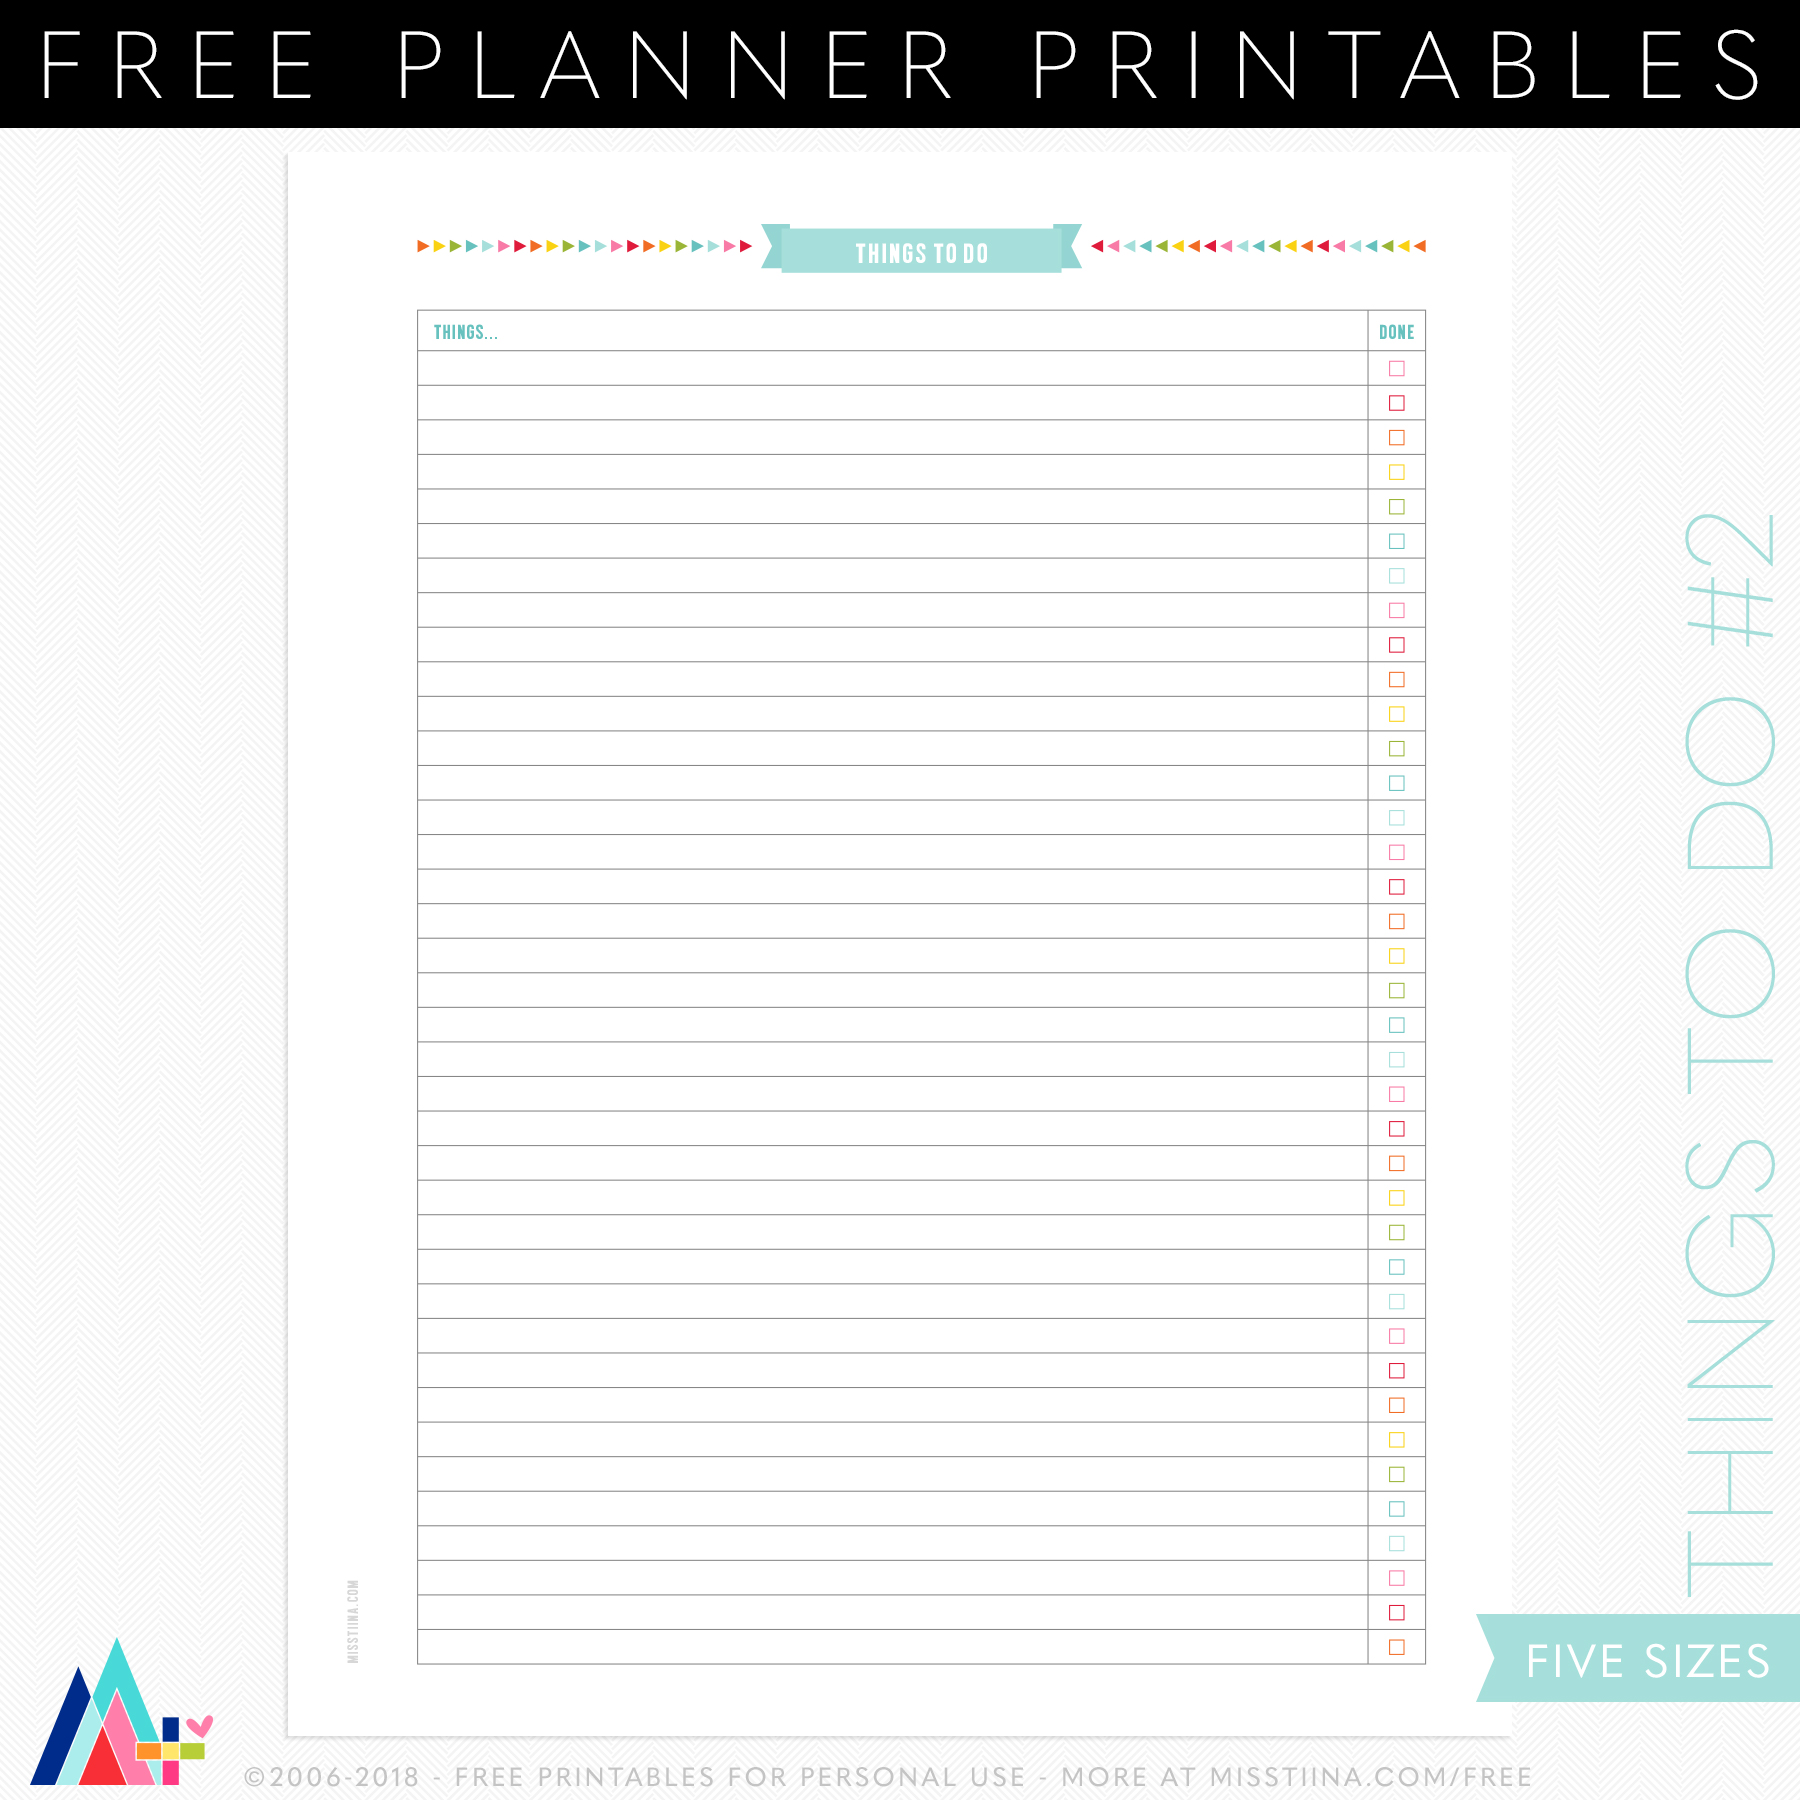 Planner Printables   Google+